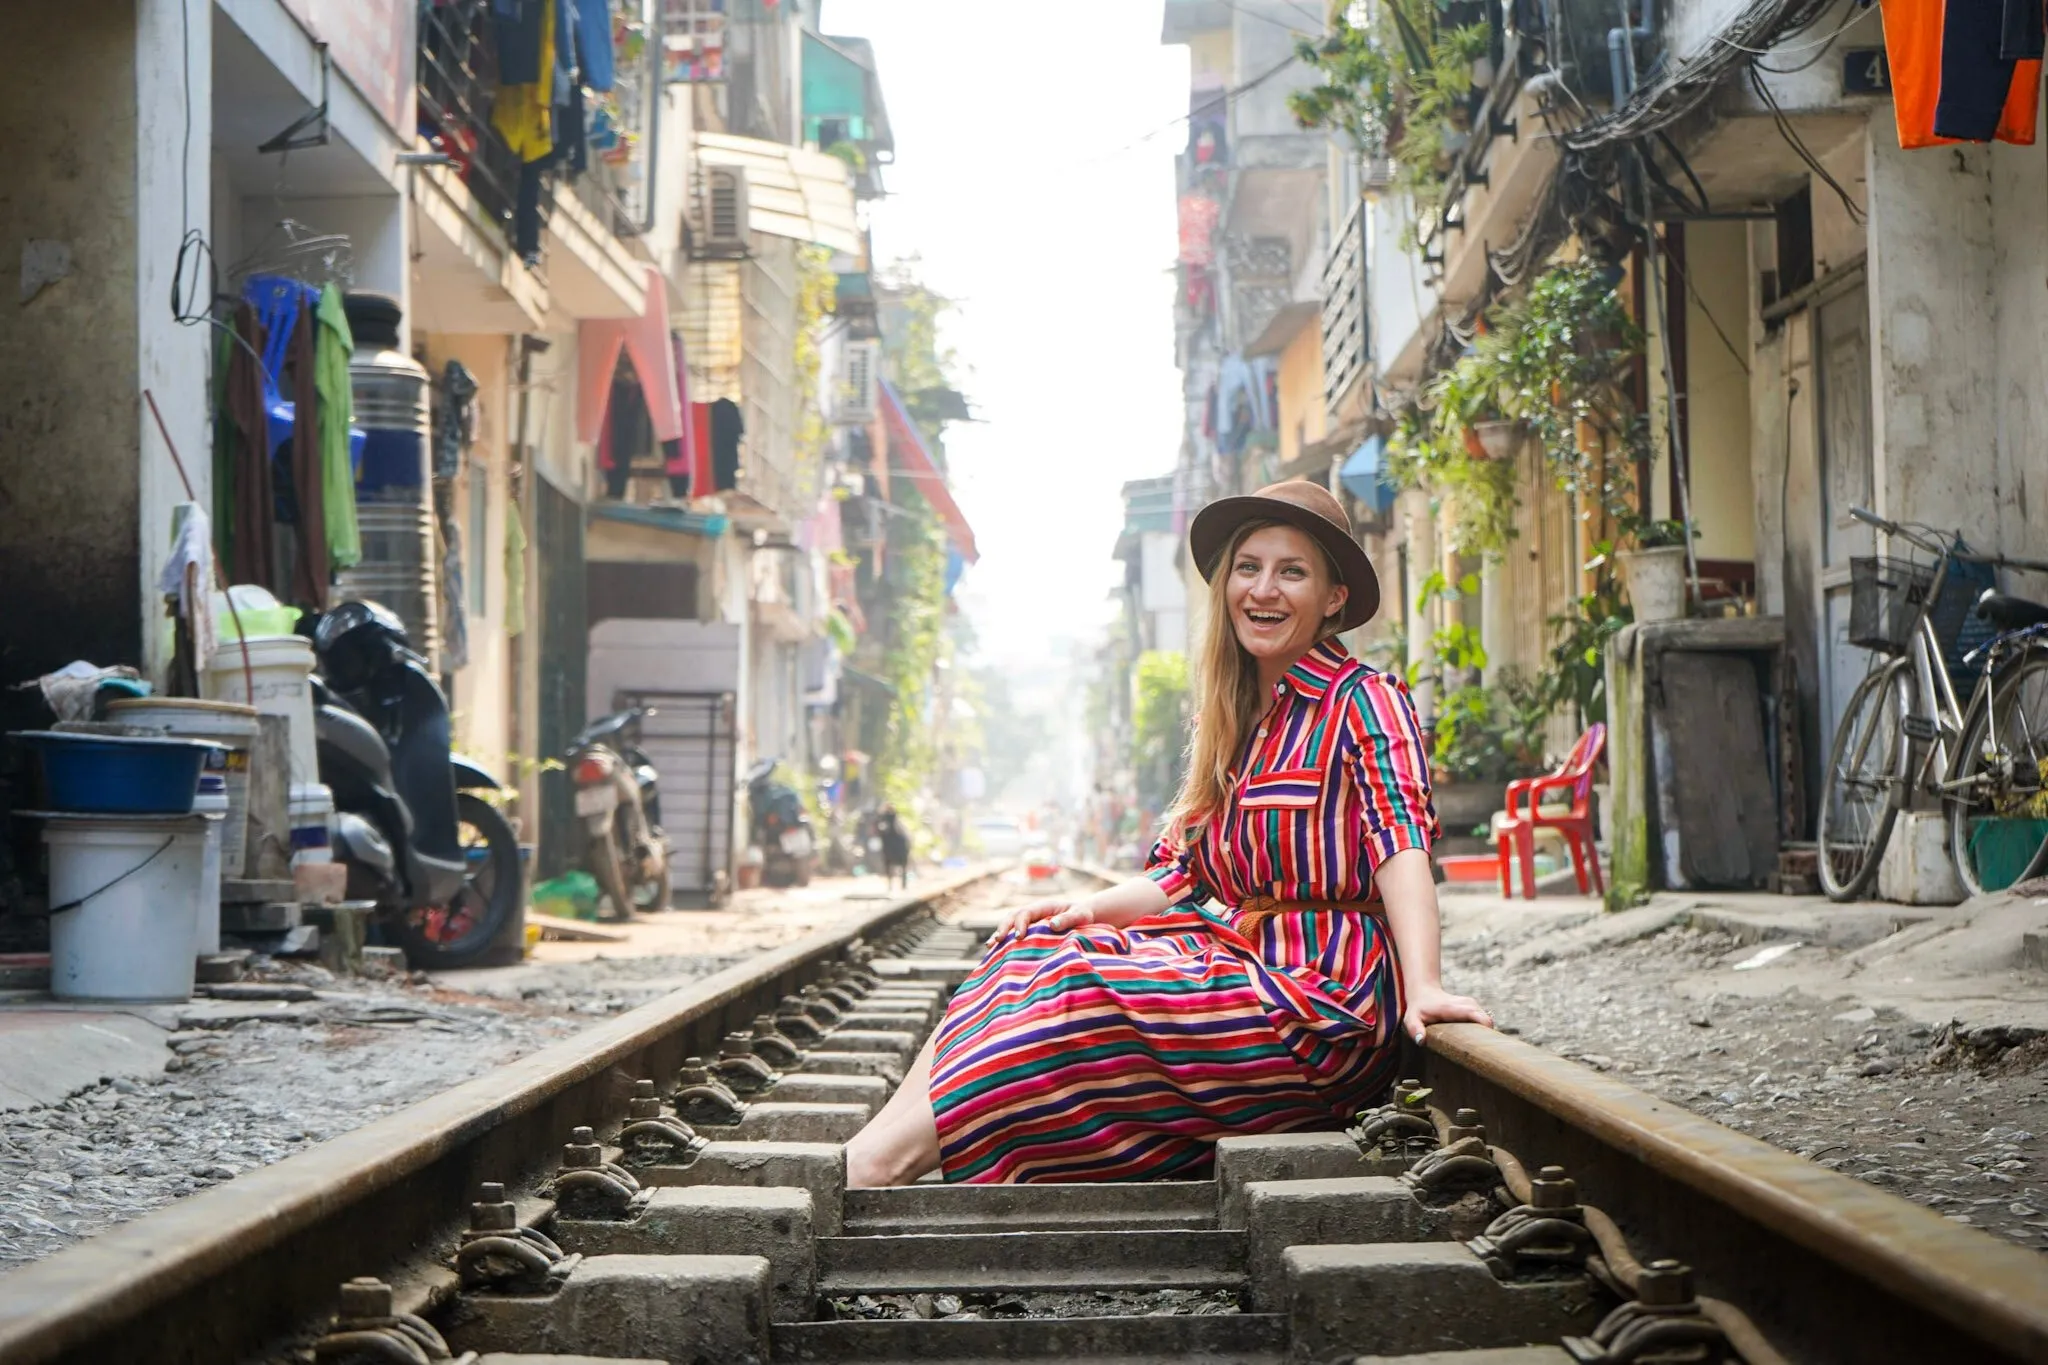 Take a selfie at the train tracks in Hanoi